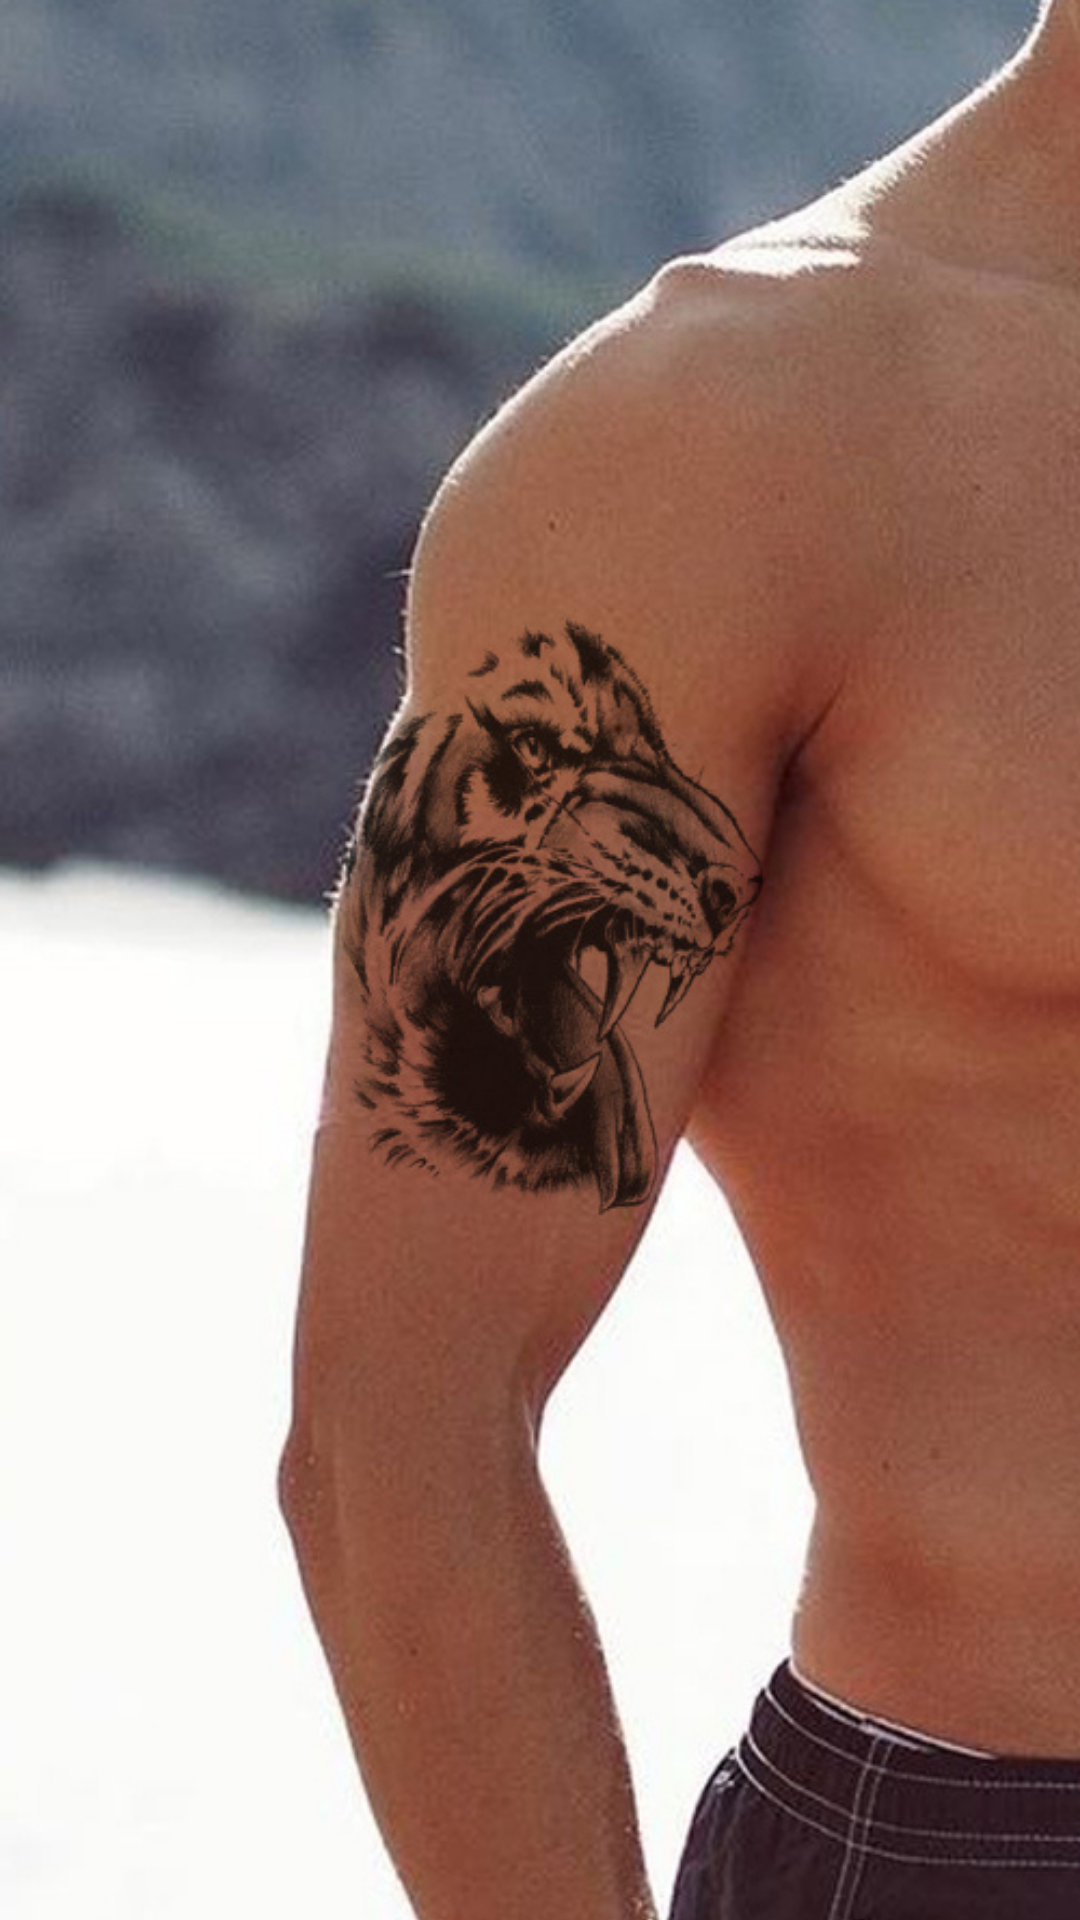 Growling Tiger Waterproof Temporary Tattoo